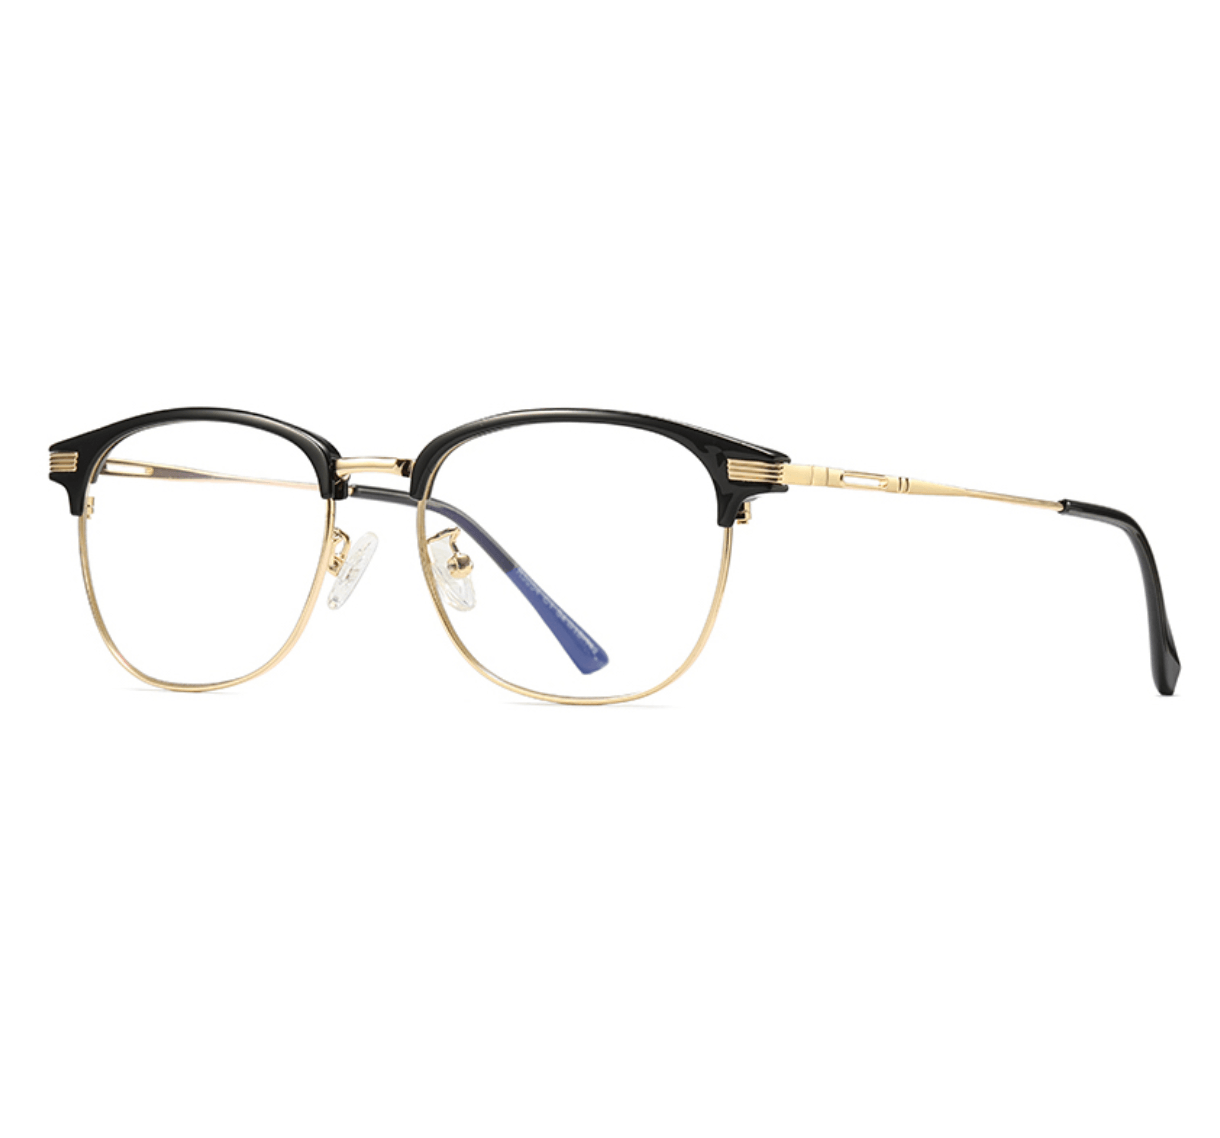 eyebrow glasses frame metal, glasses frames suppliers, optical frames wholesale suppliers, custom made glasses frames